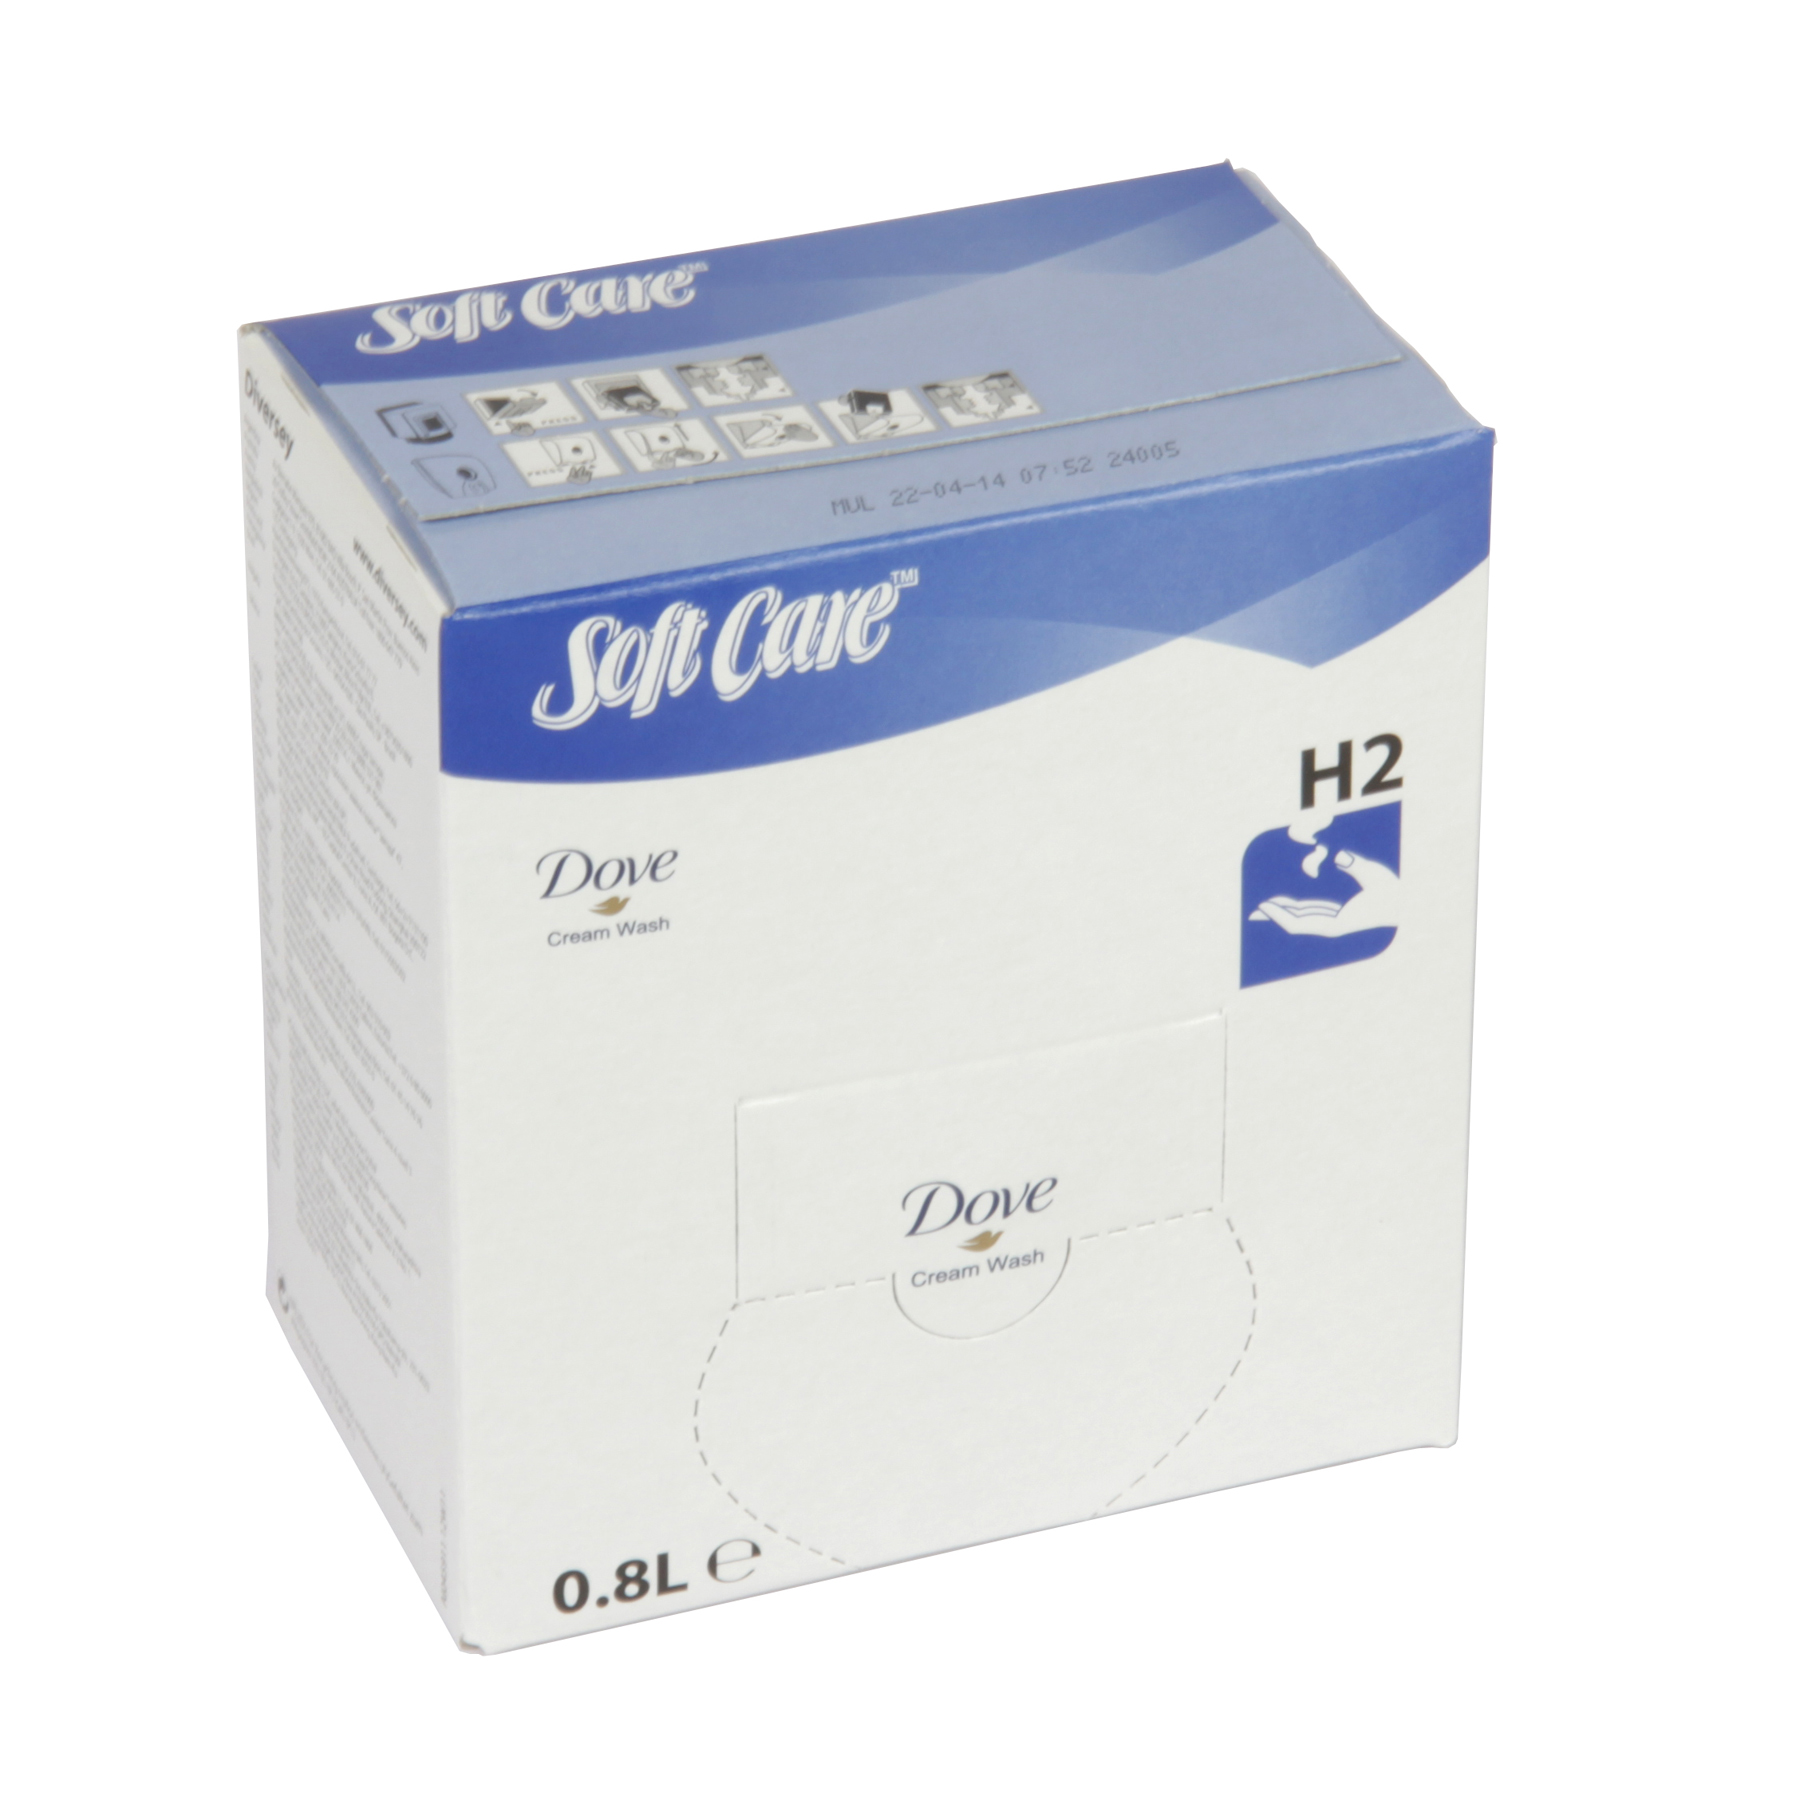 Seifencreme Soft Care Dove Cream H2 800ml für Spender